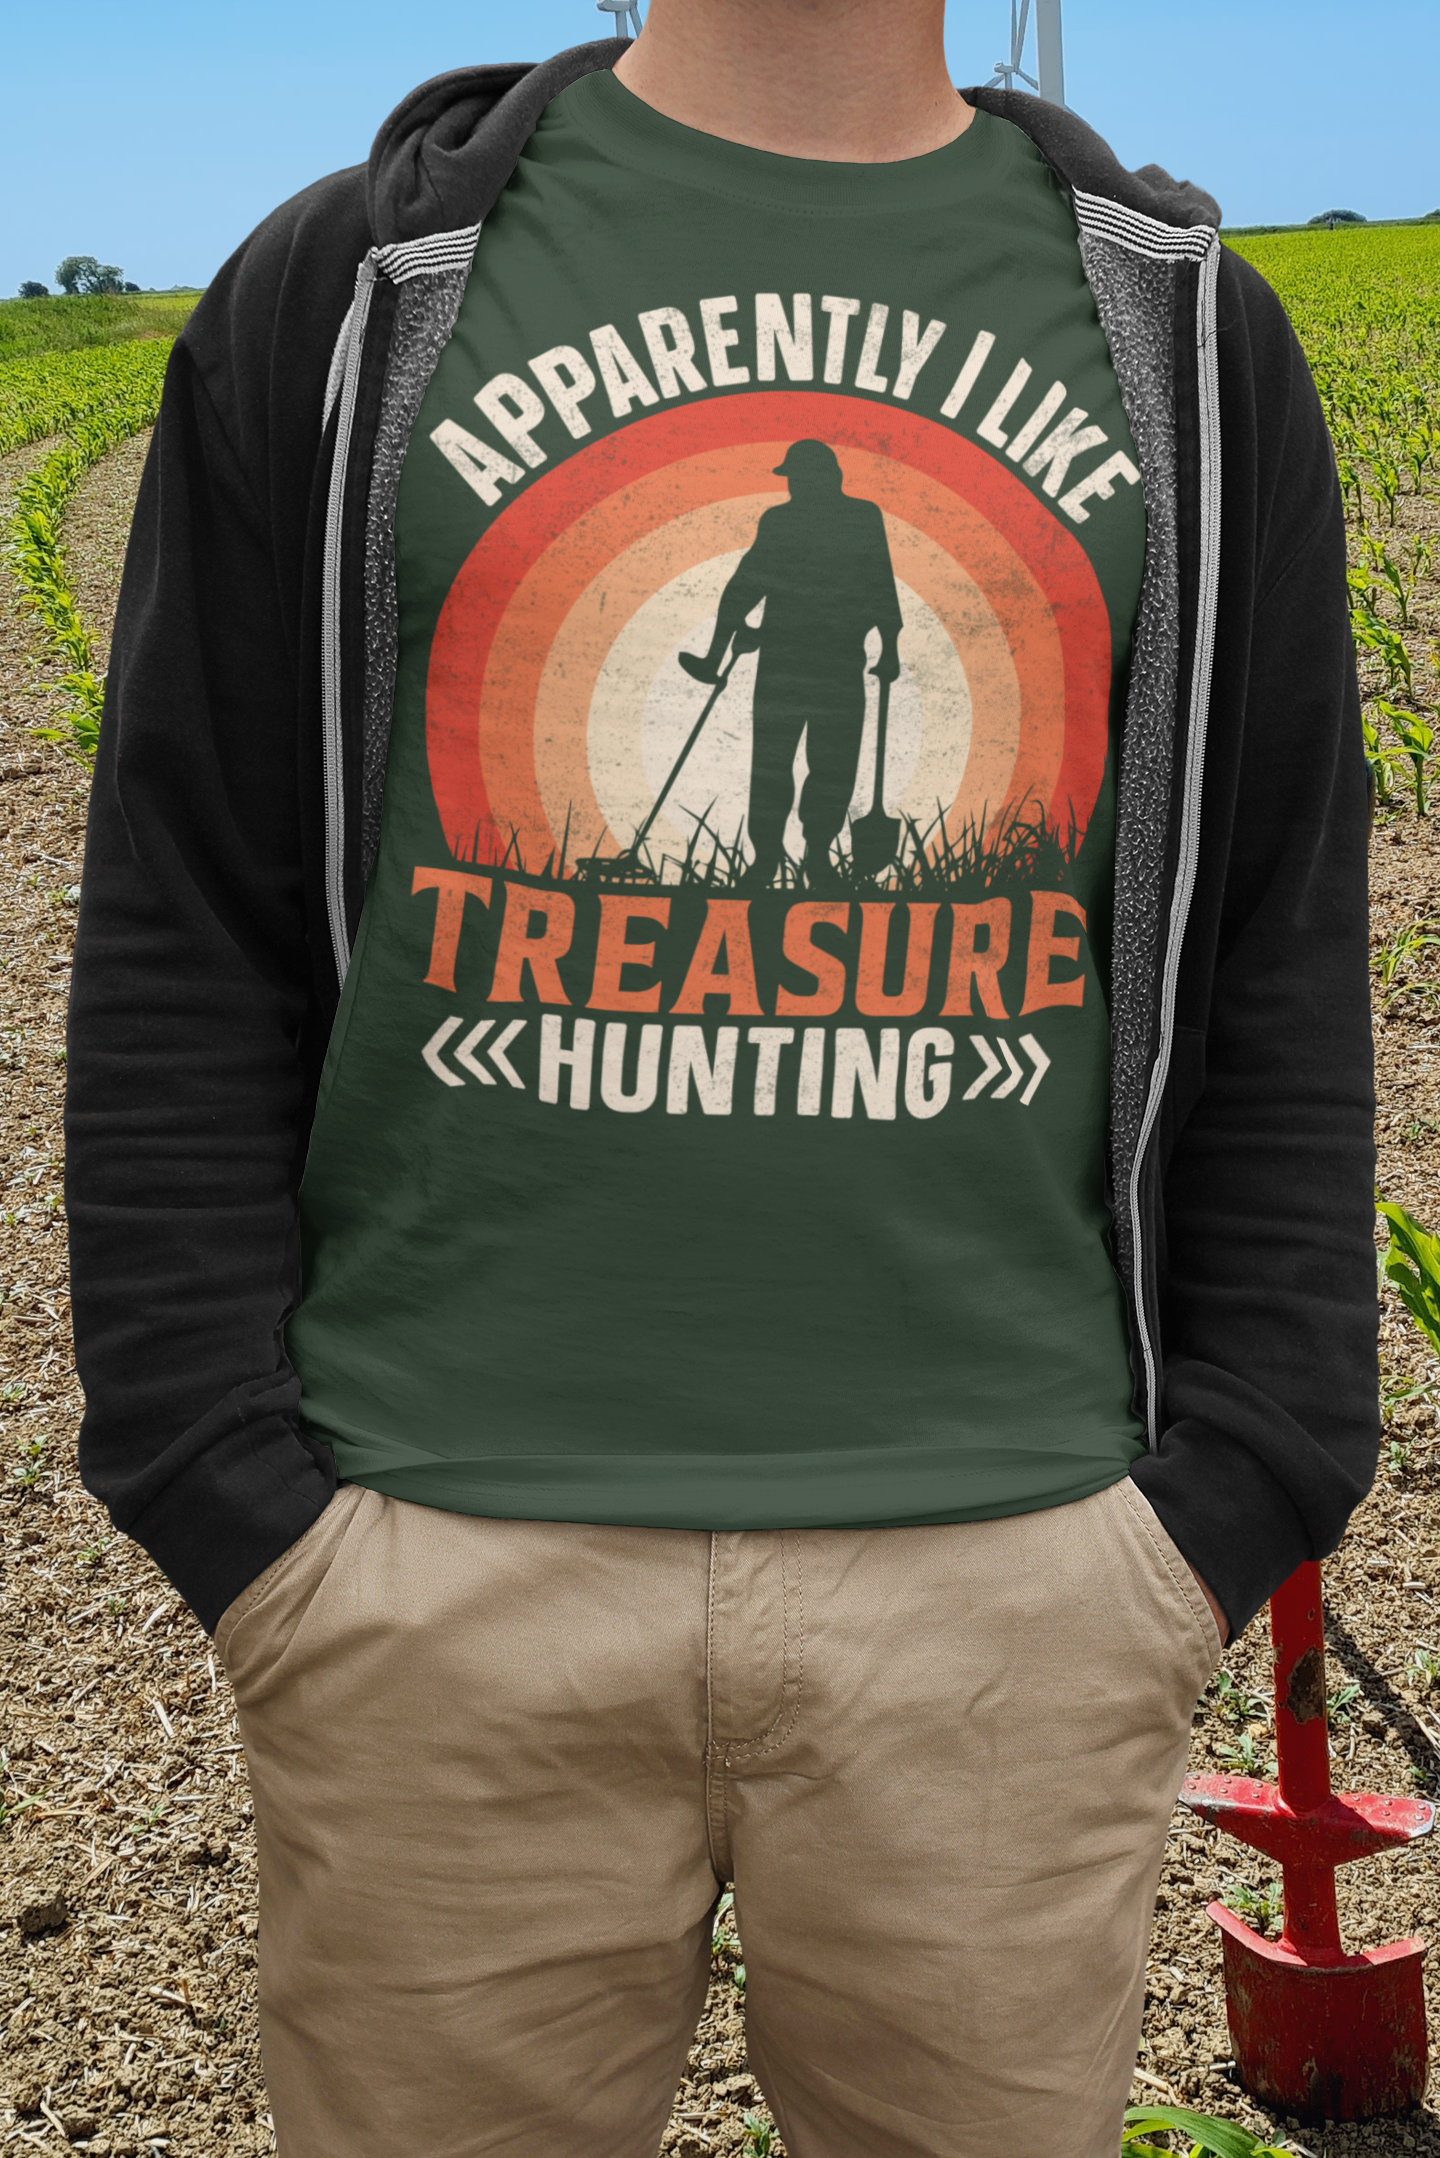 Apparently, I like Treasure Hunting - T-shirt